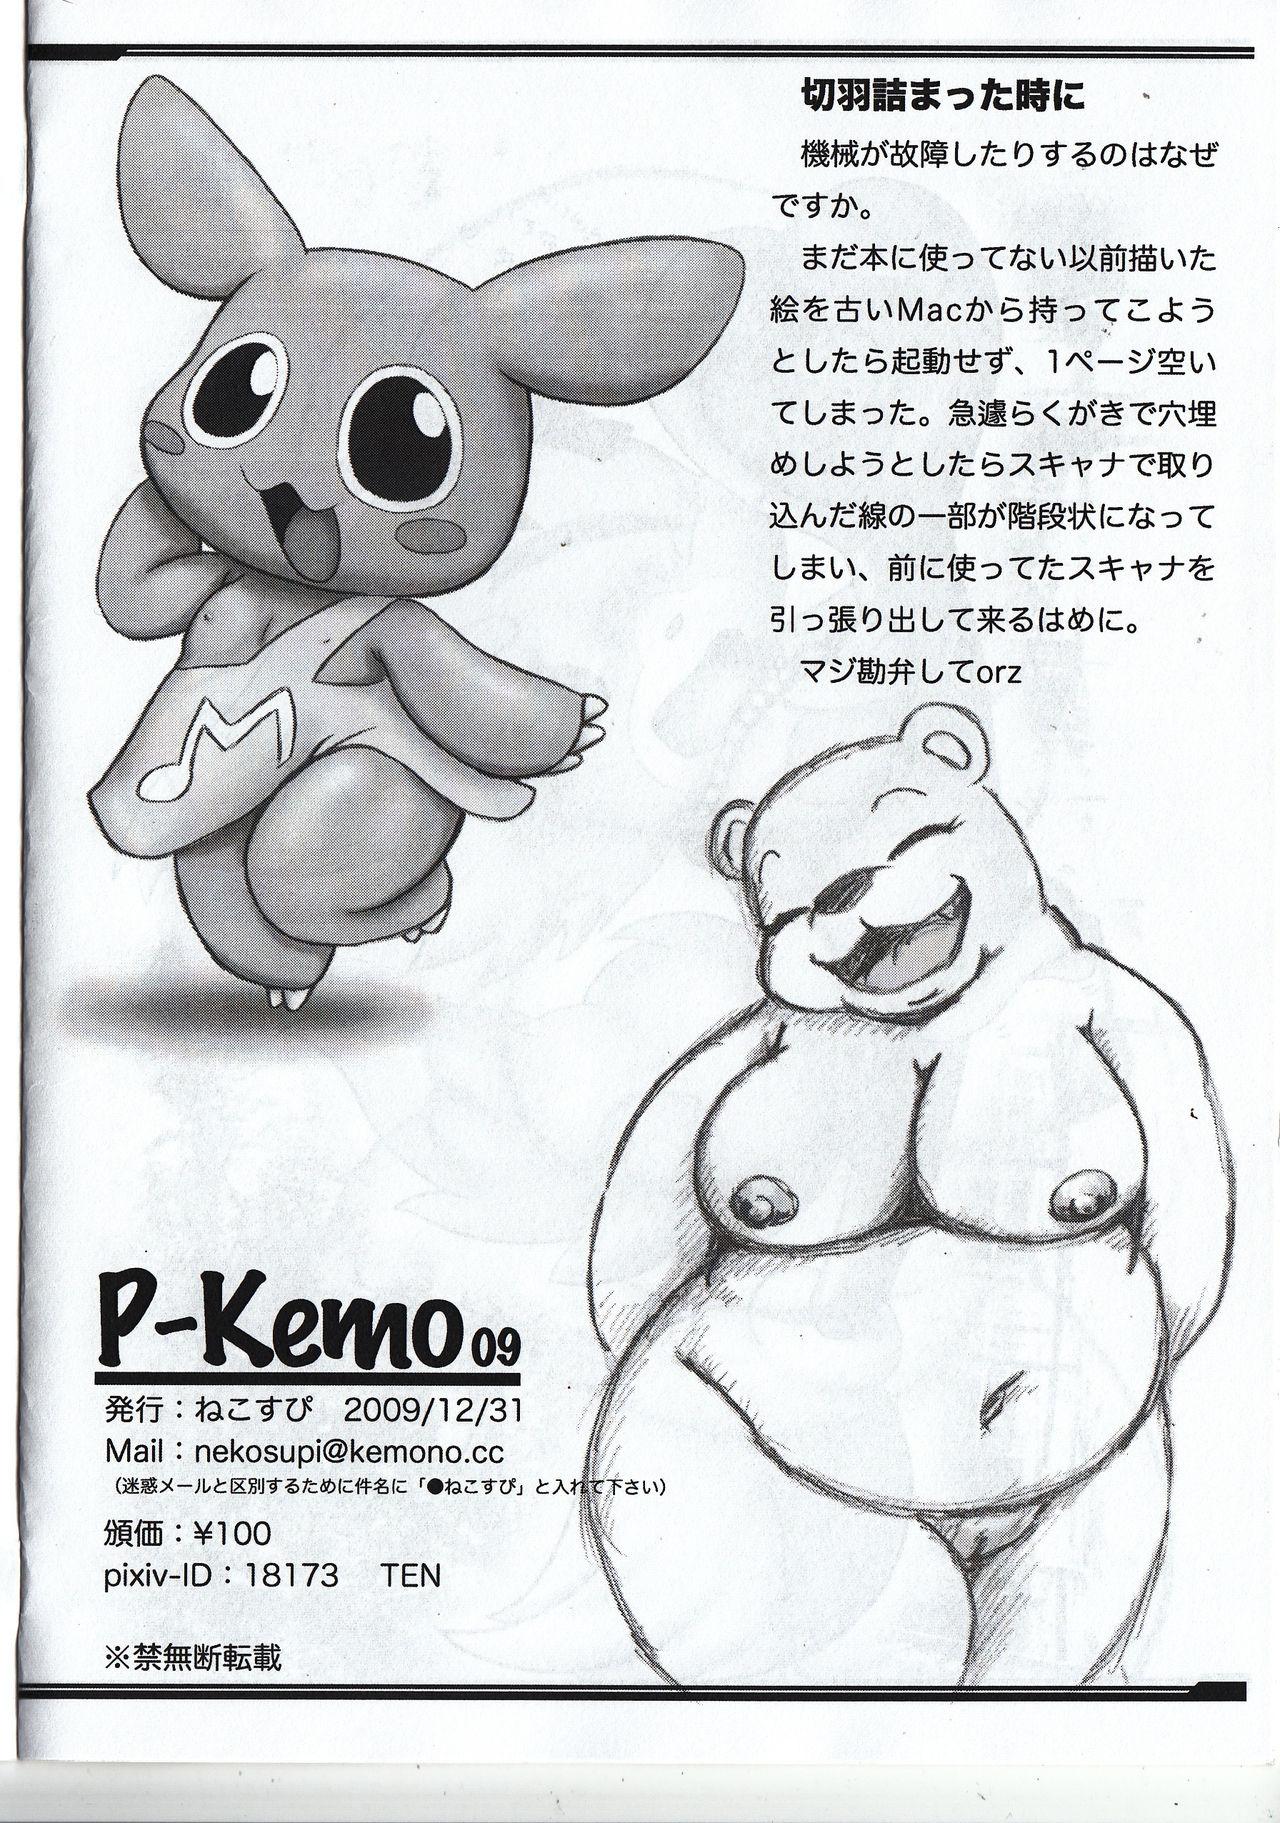 P-Kemo09 13